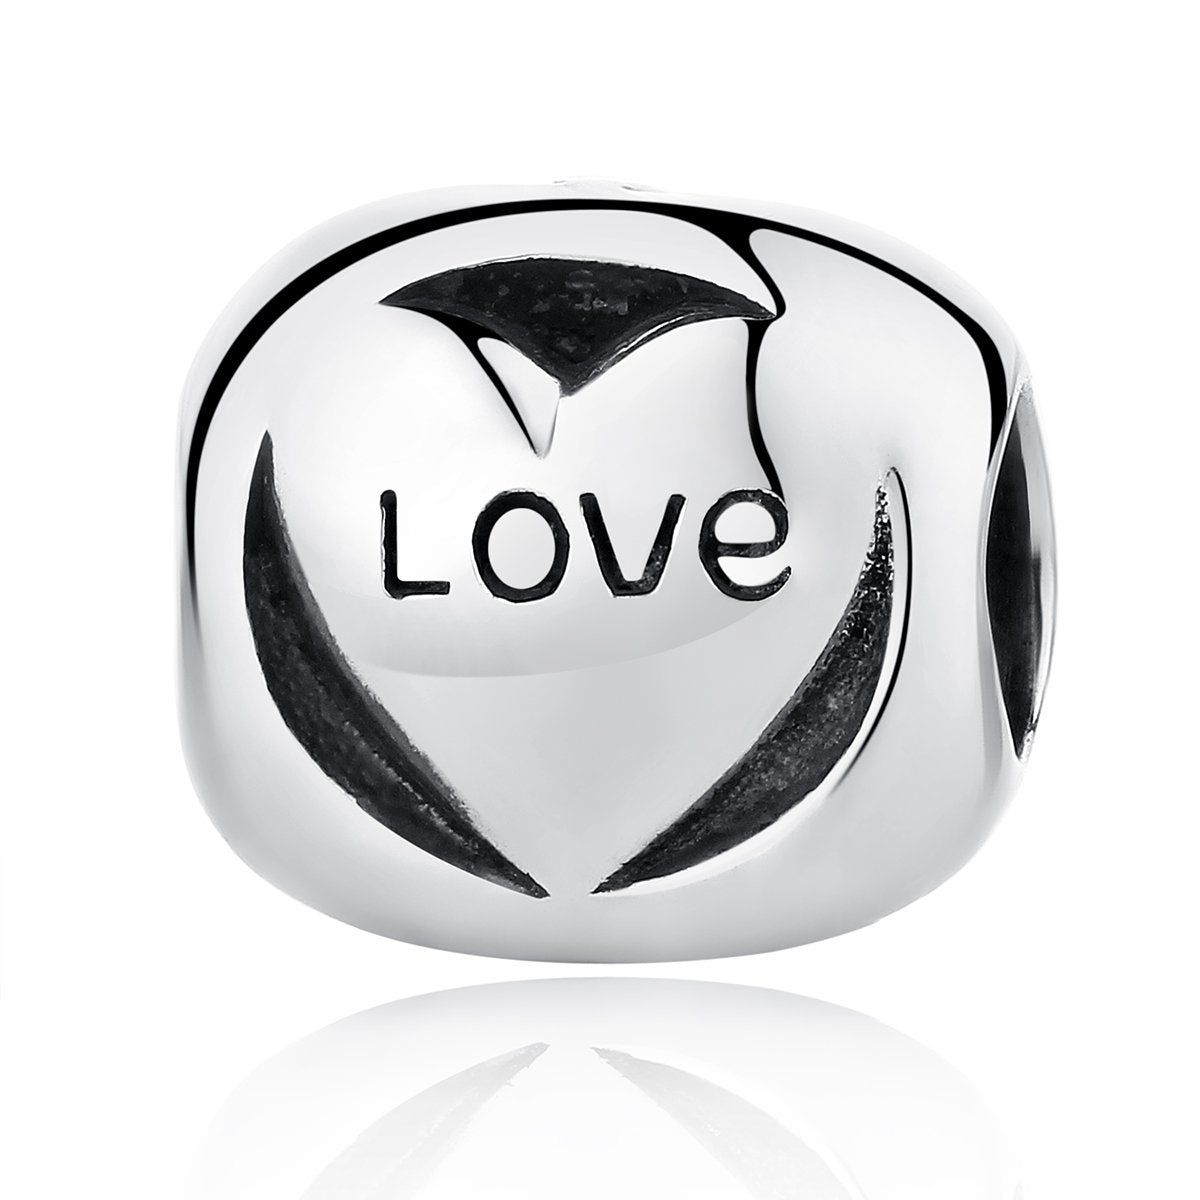 Sterling 925 silver charm ninja love bead pendant fits Pandora charm and European charm bracelet Xaxe.com